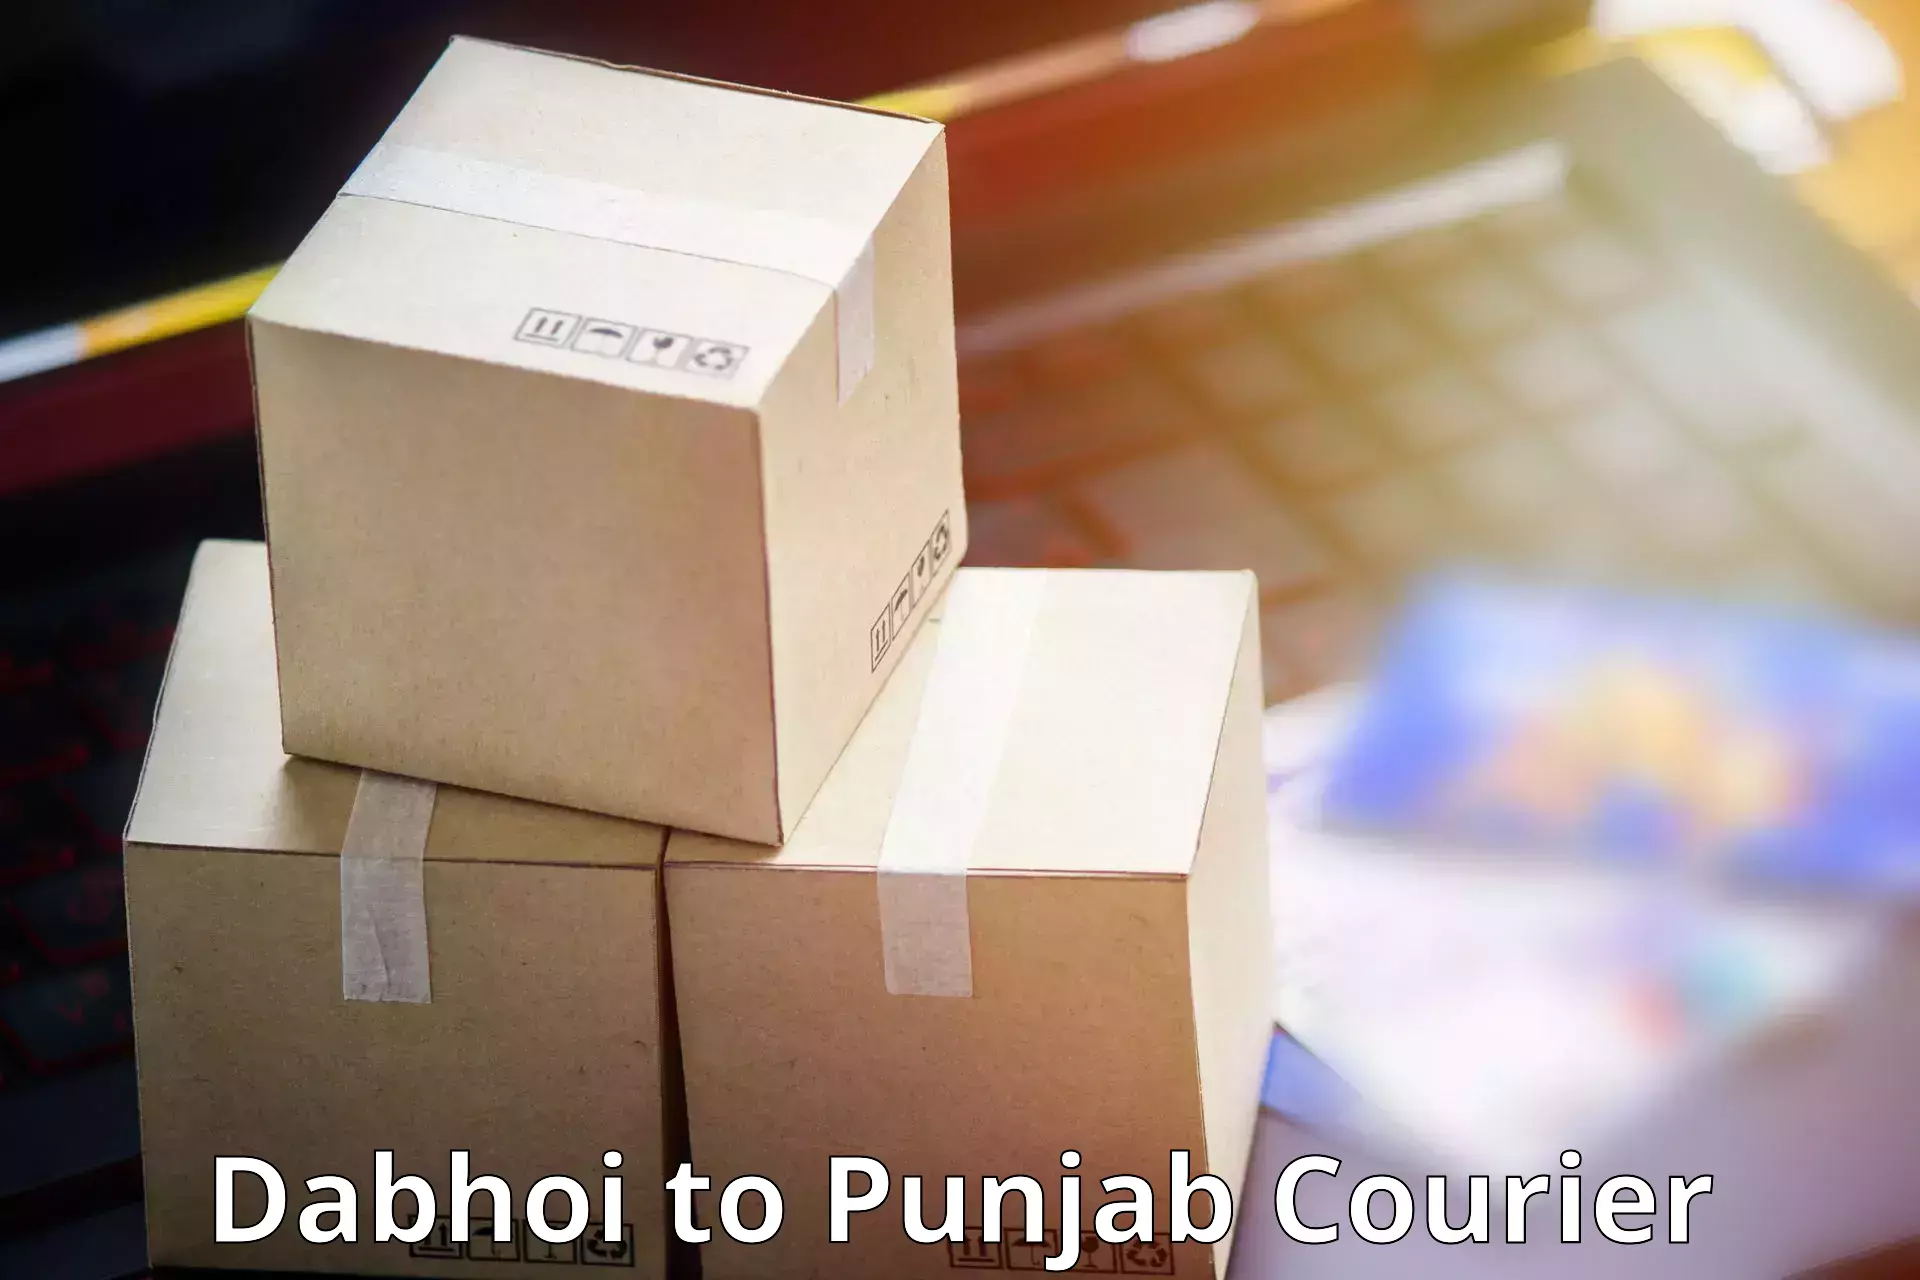 Courier insurance Dabhoi to Punjab